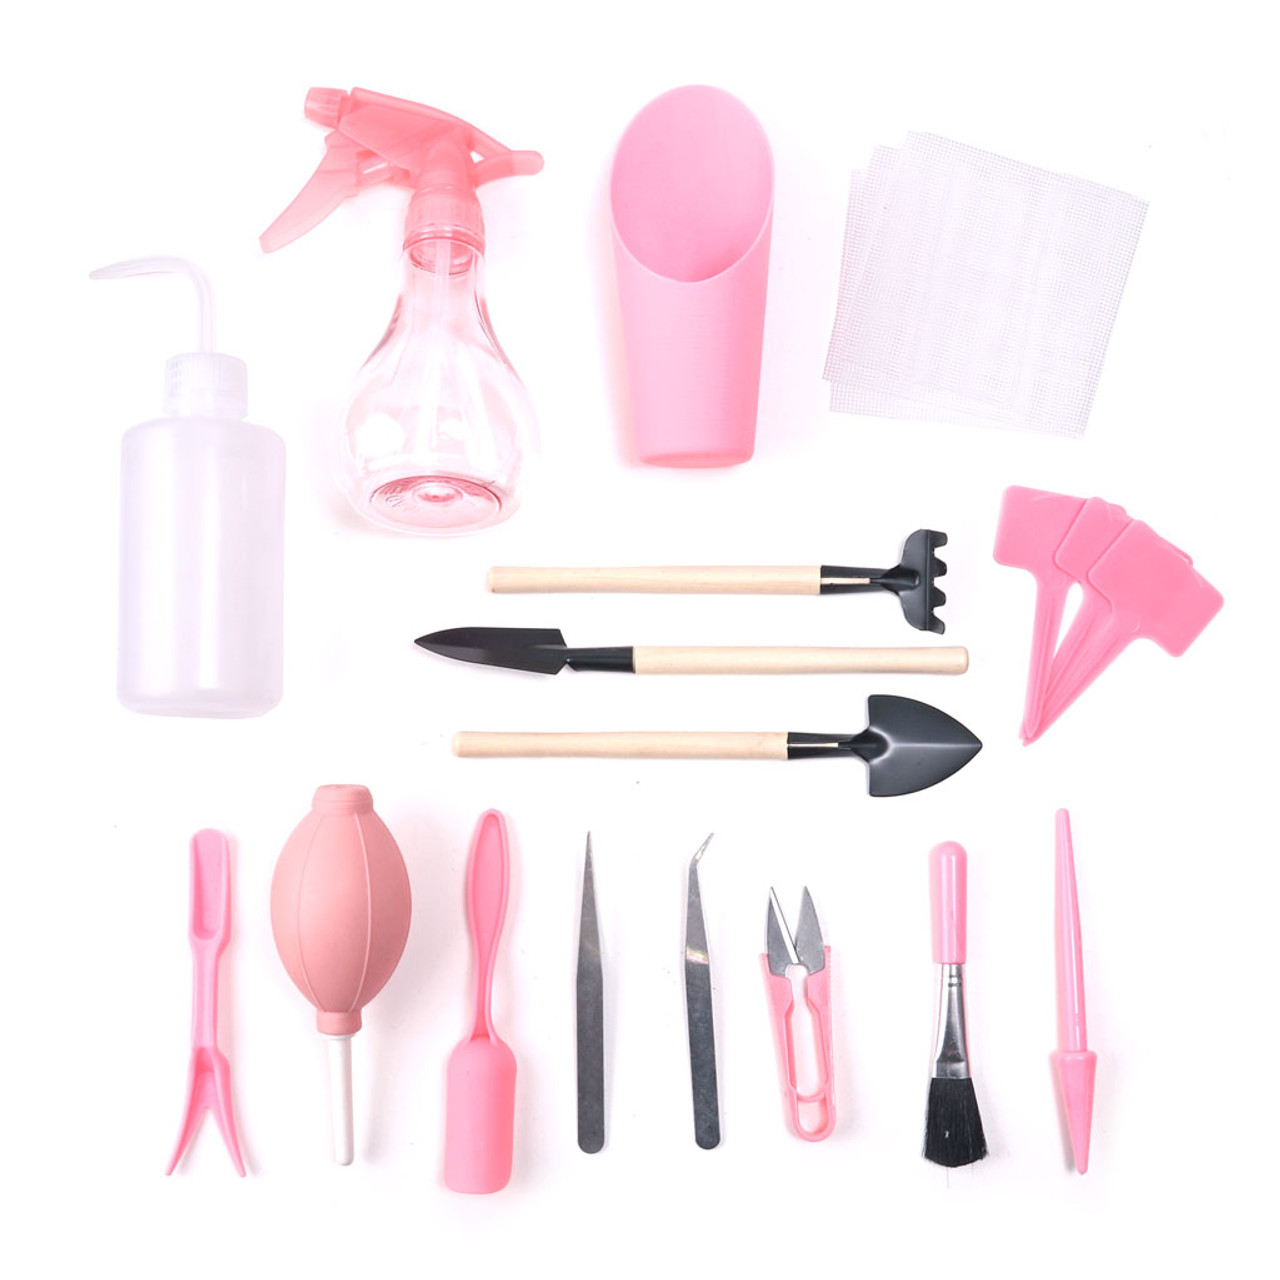 Pink gardening tools on white backgorund.